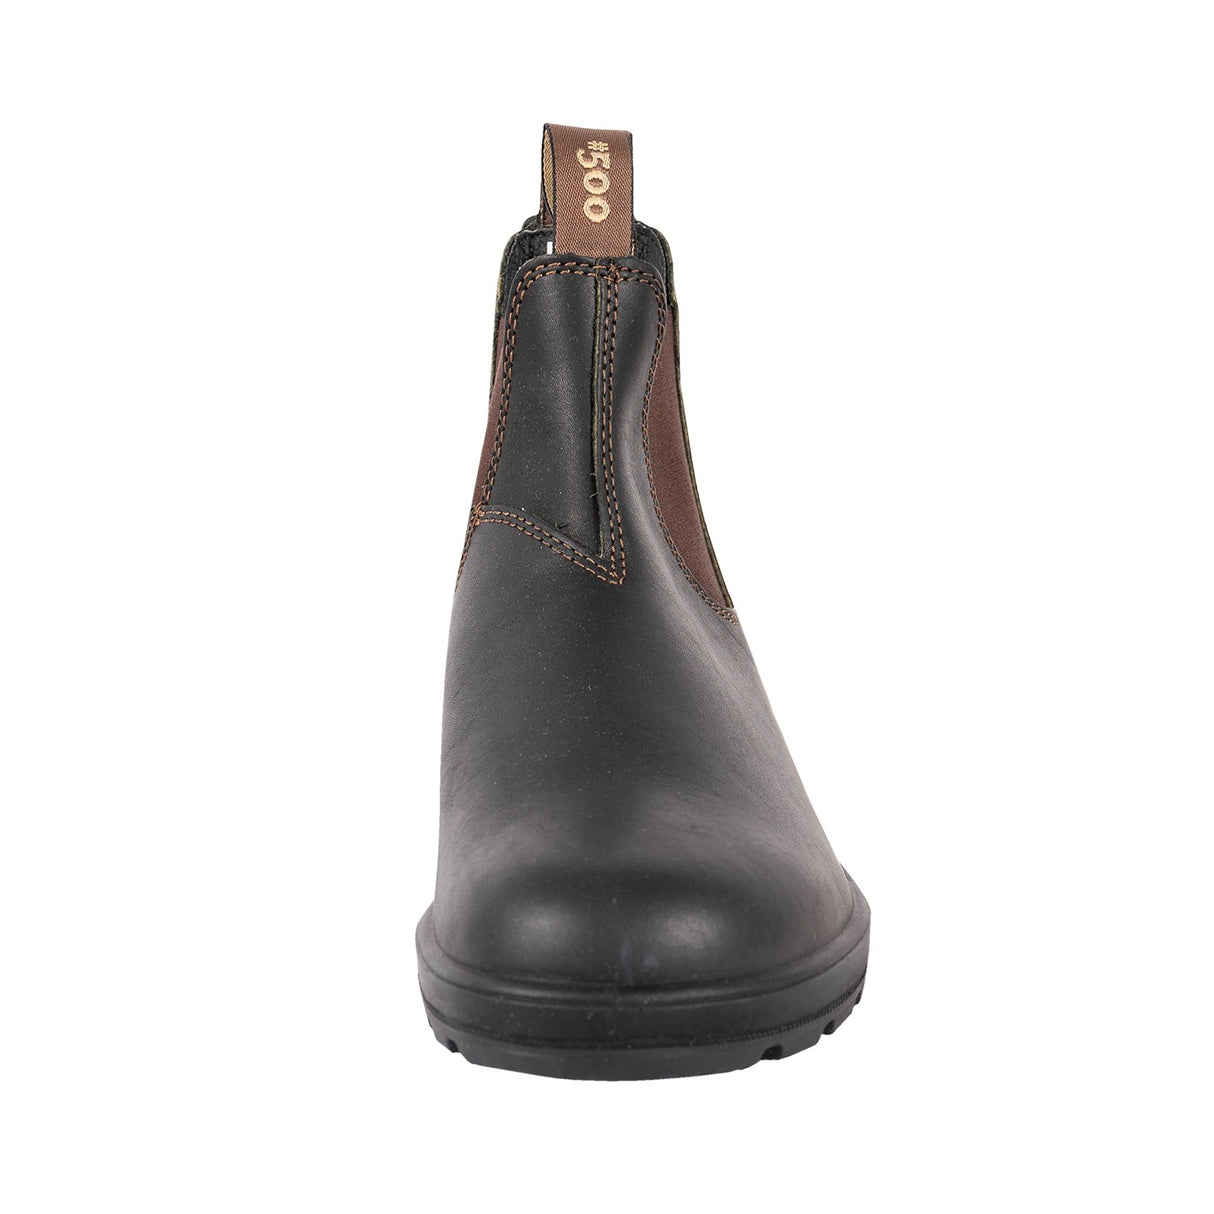 Blundstone Original Boots